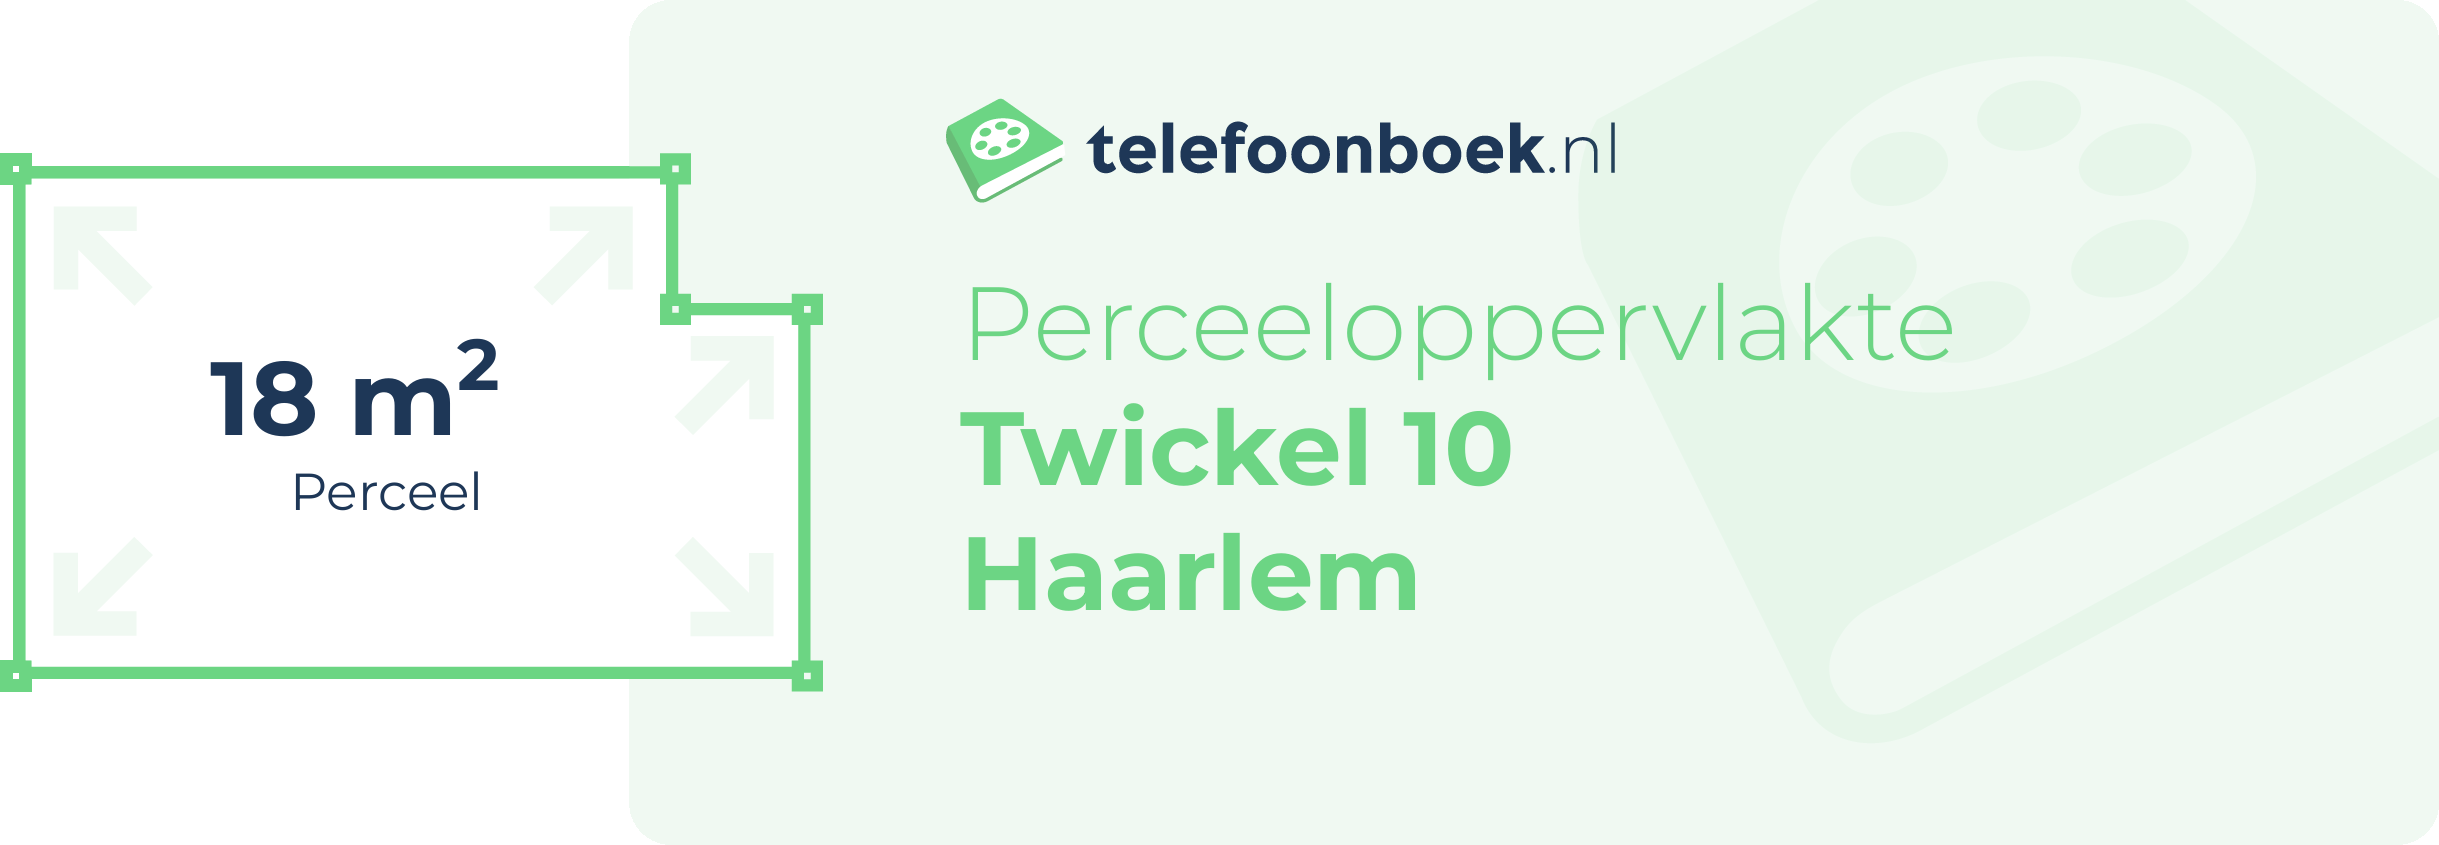 Perceeloppervlakte Twickel 10 Haarlem